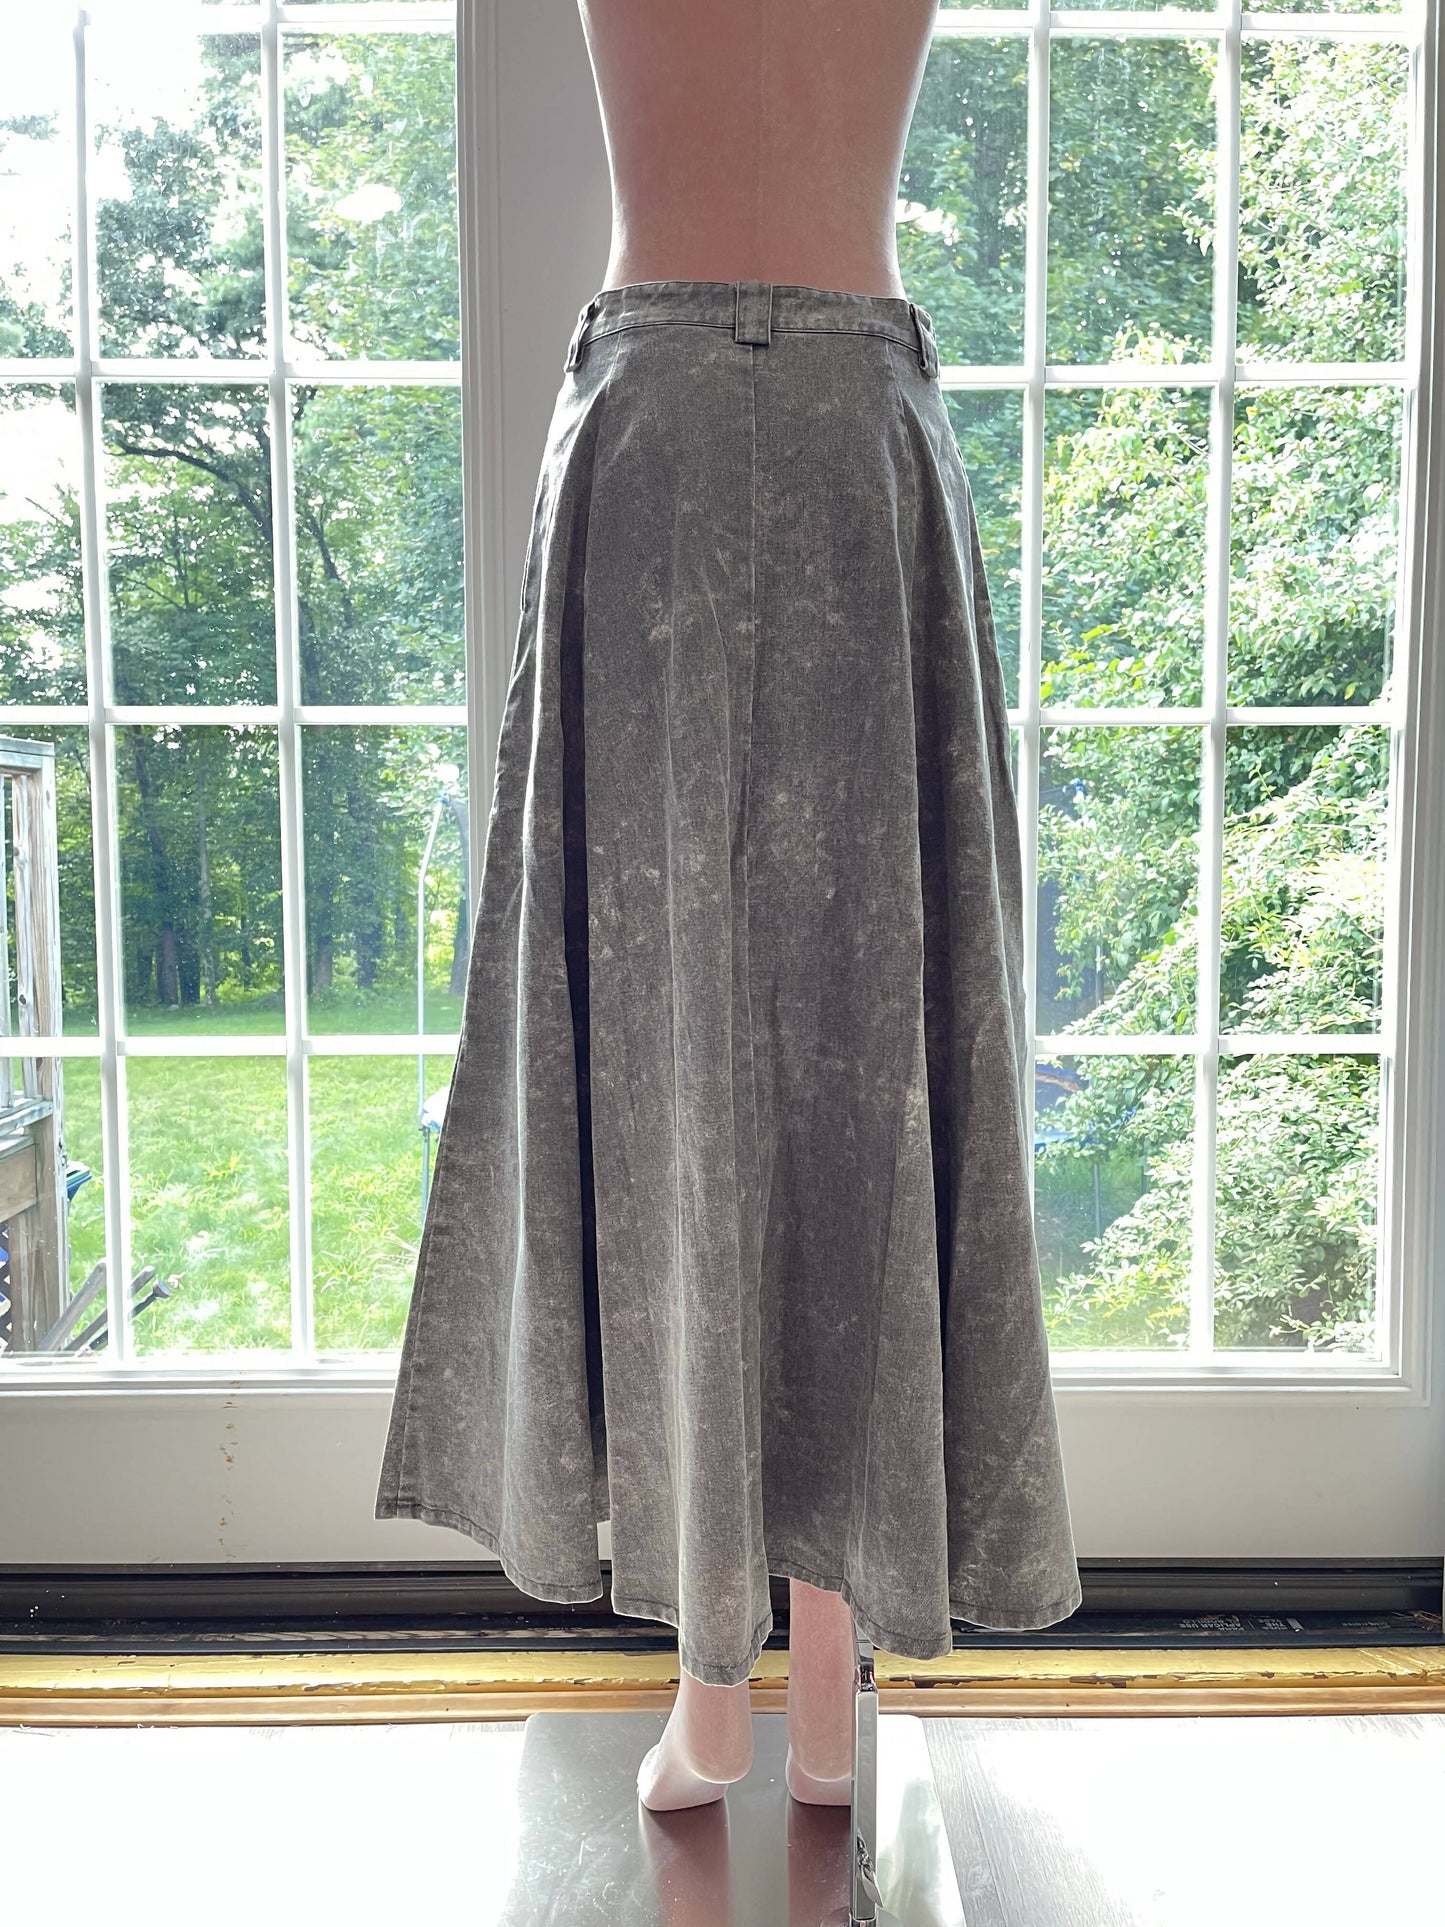 Snowfall Elegance: Ankle-Length Flare Denim Skirt with Gray Snowflake Pattern